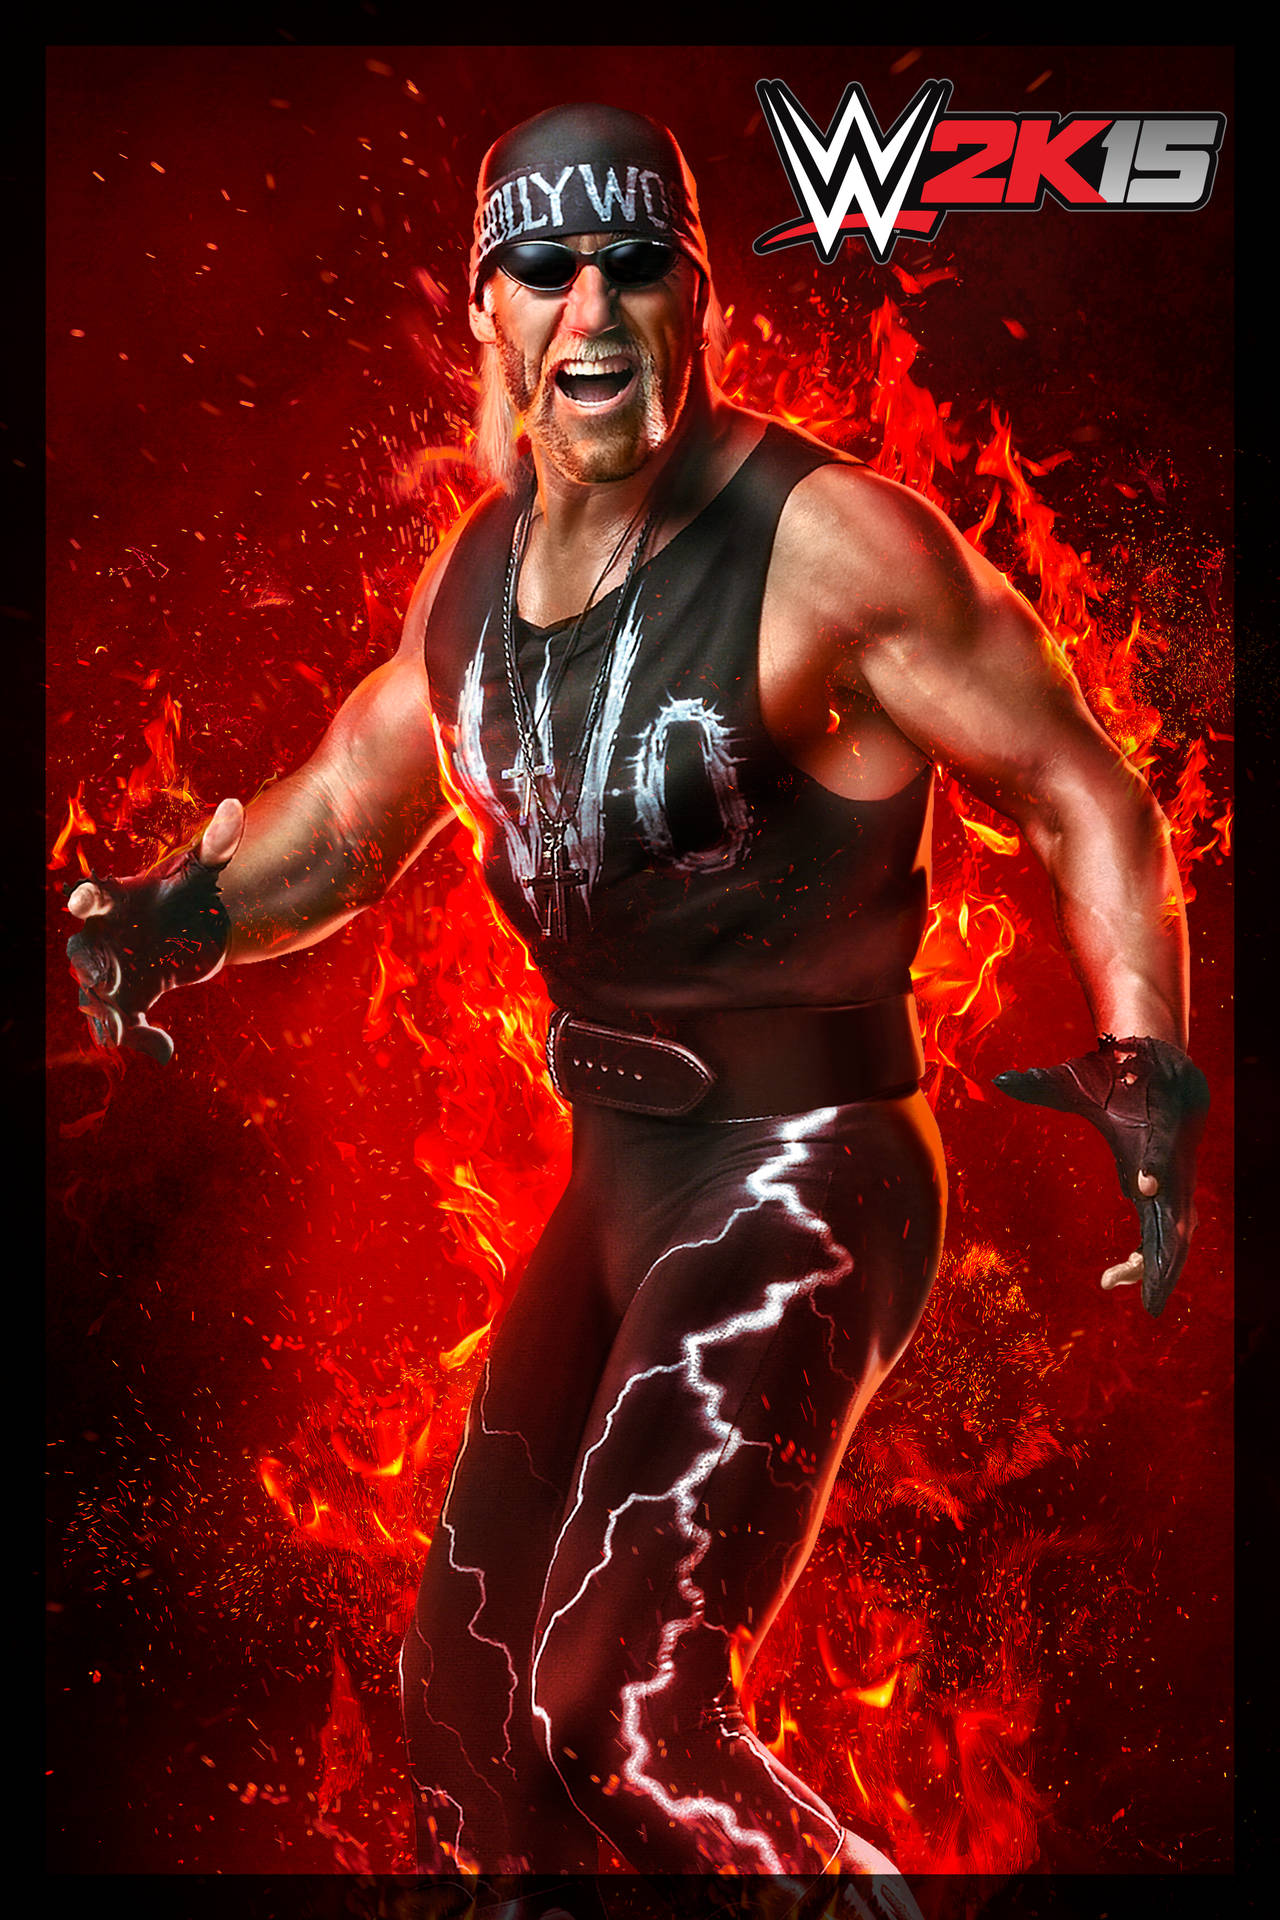 Hulk Hogan W2k15 Fiery Poster Wallpaper